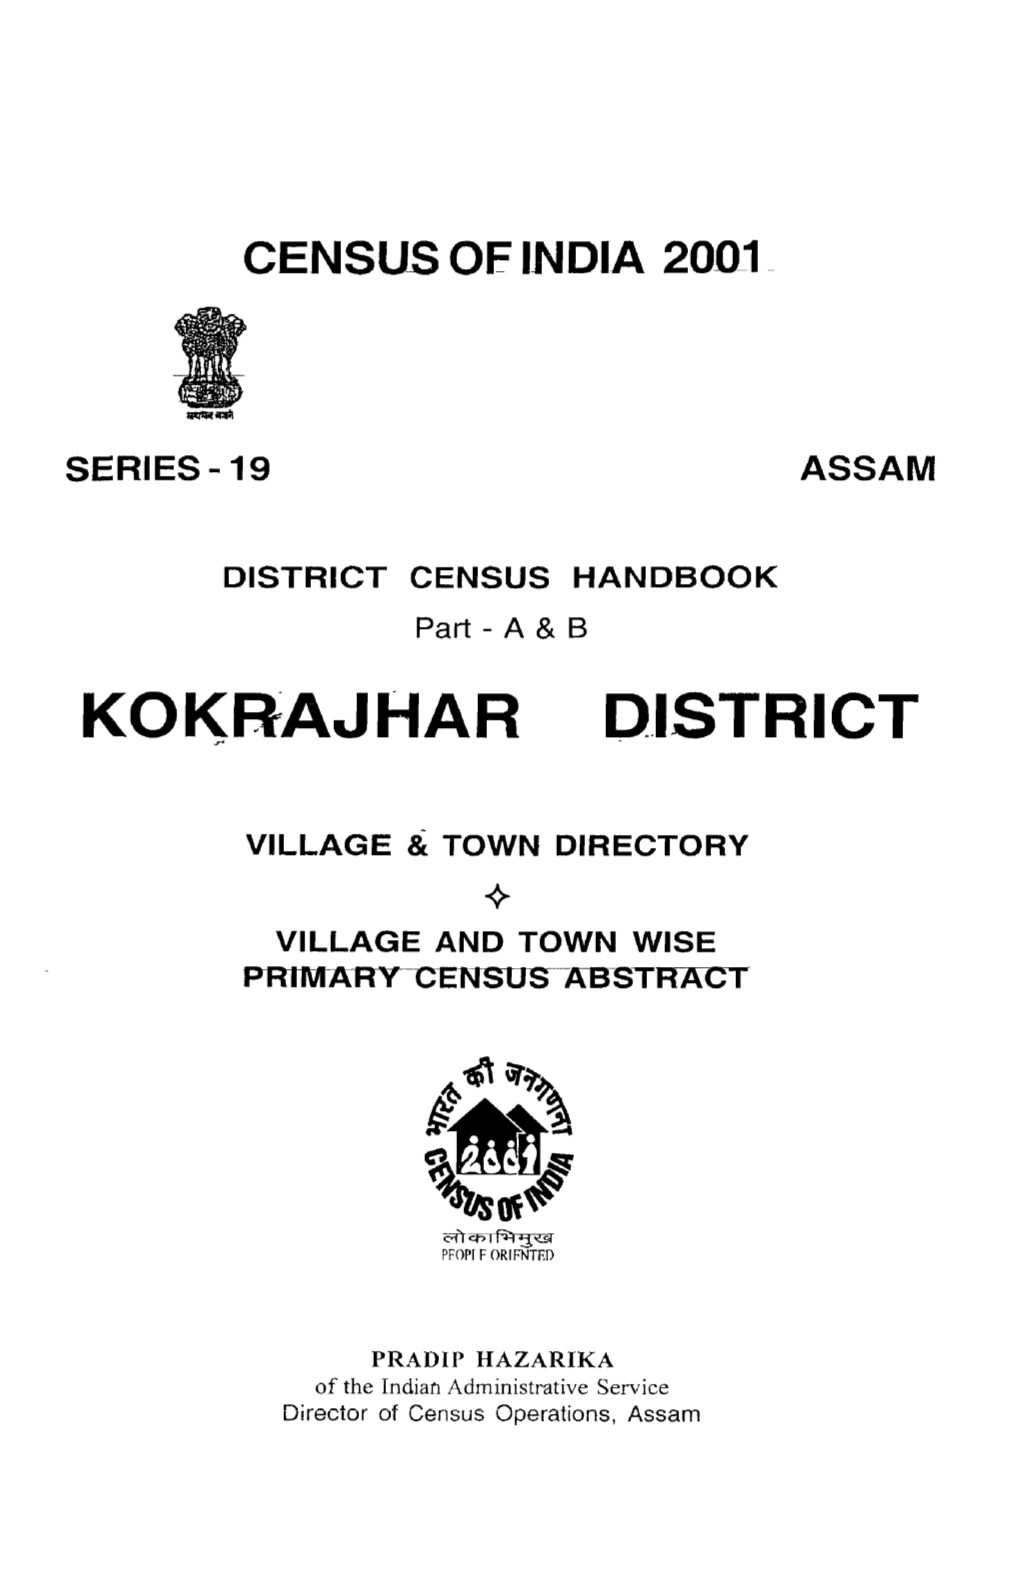 District Census Handbook, Part XII-A & B